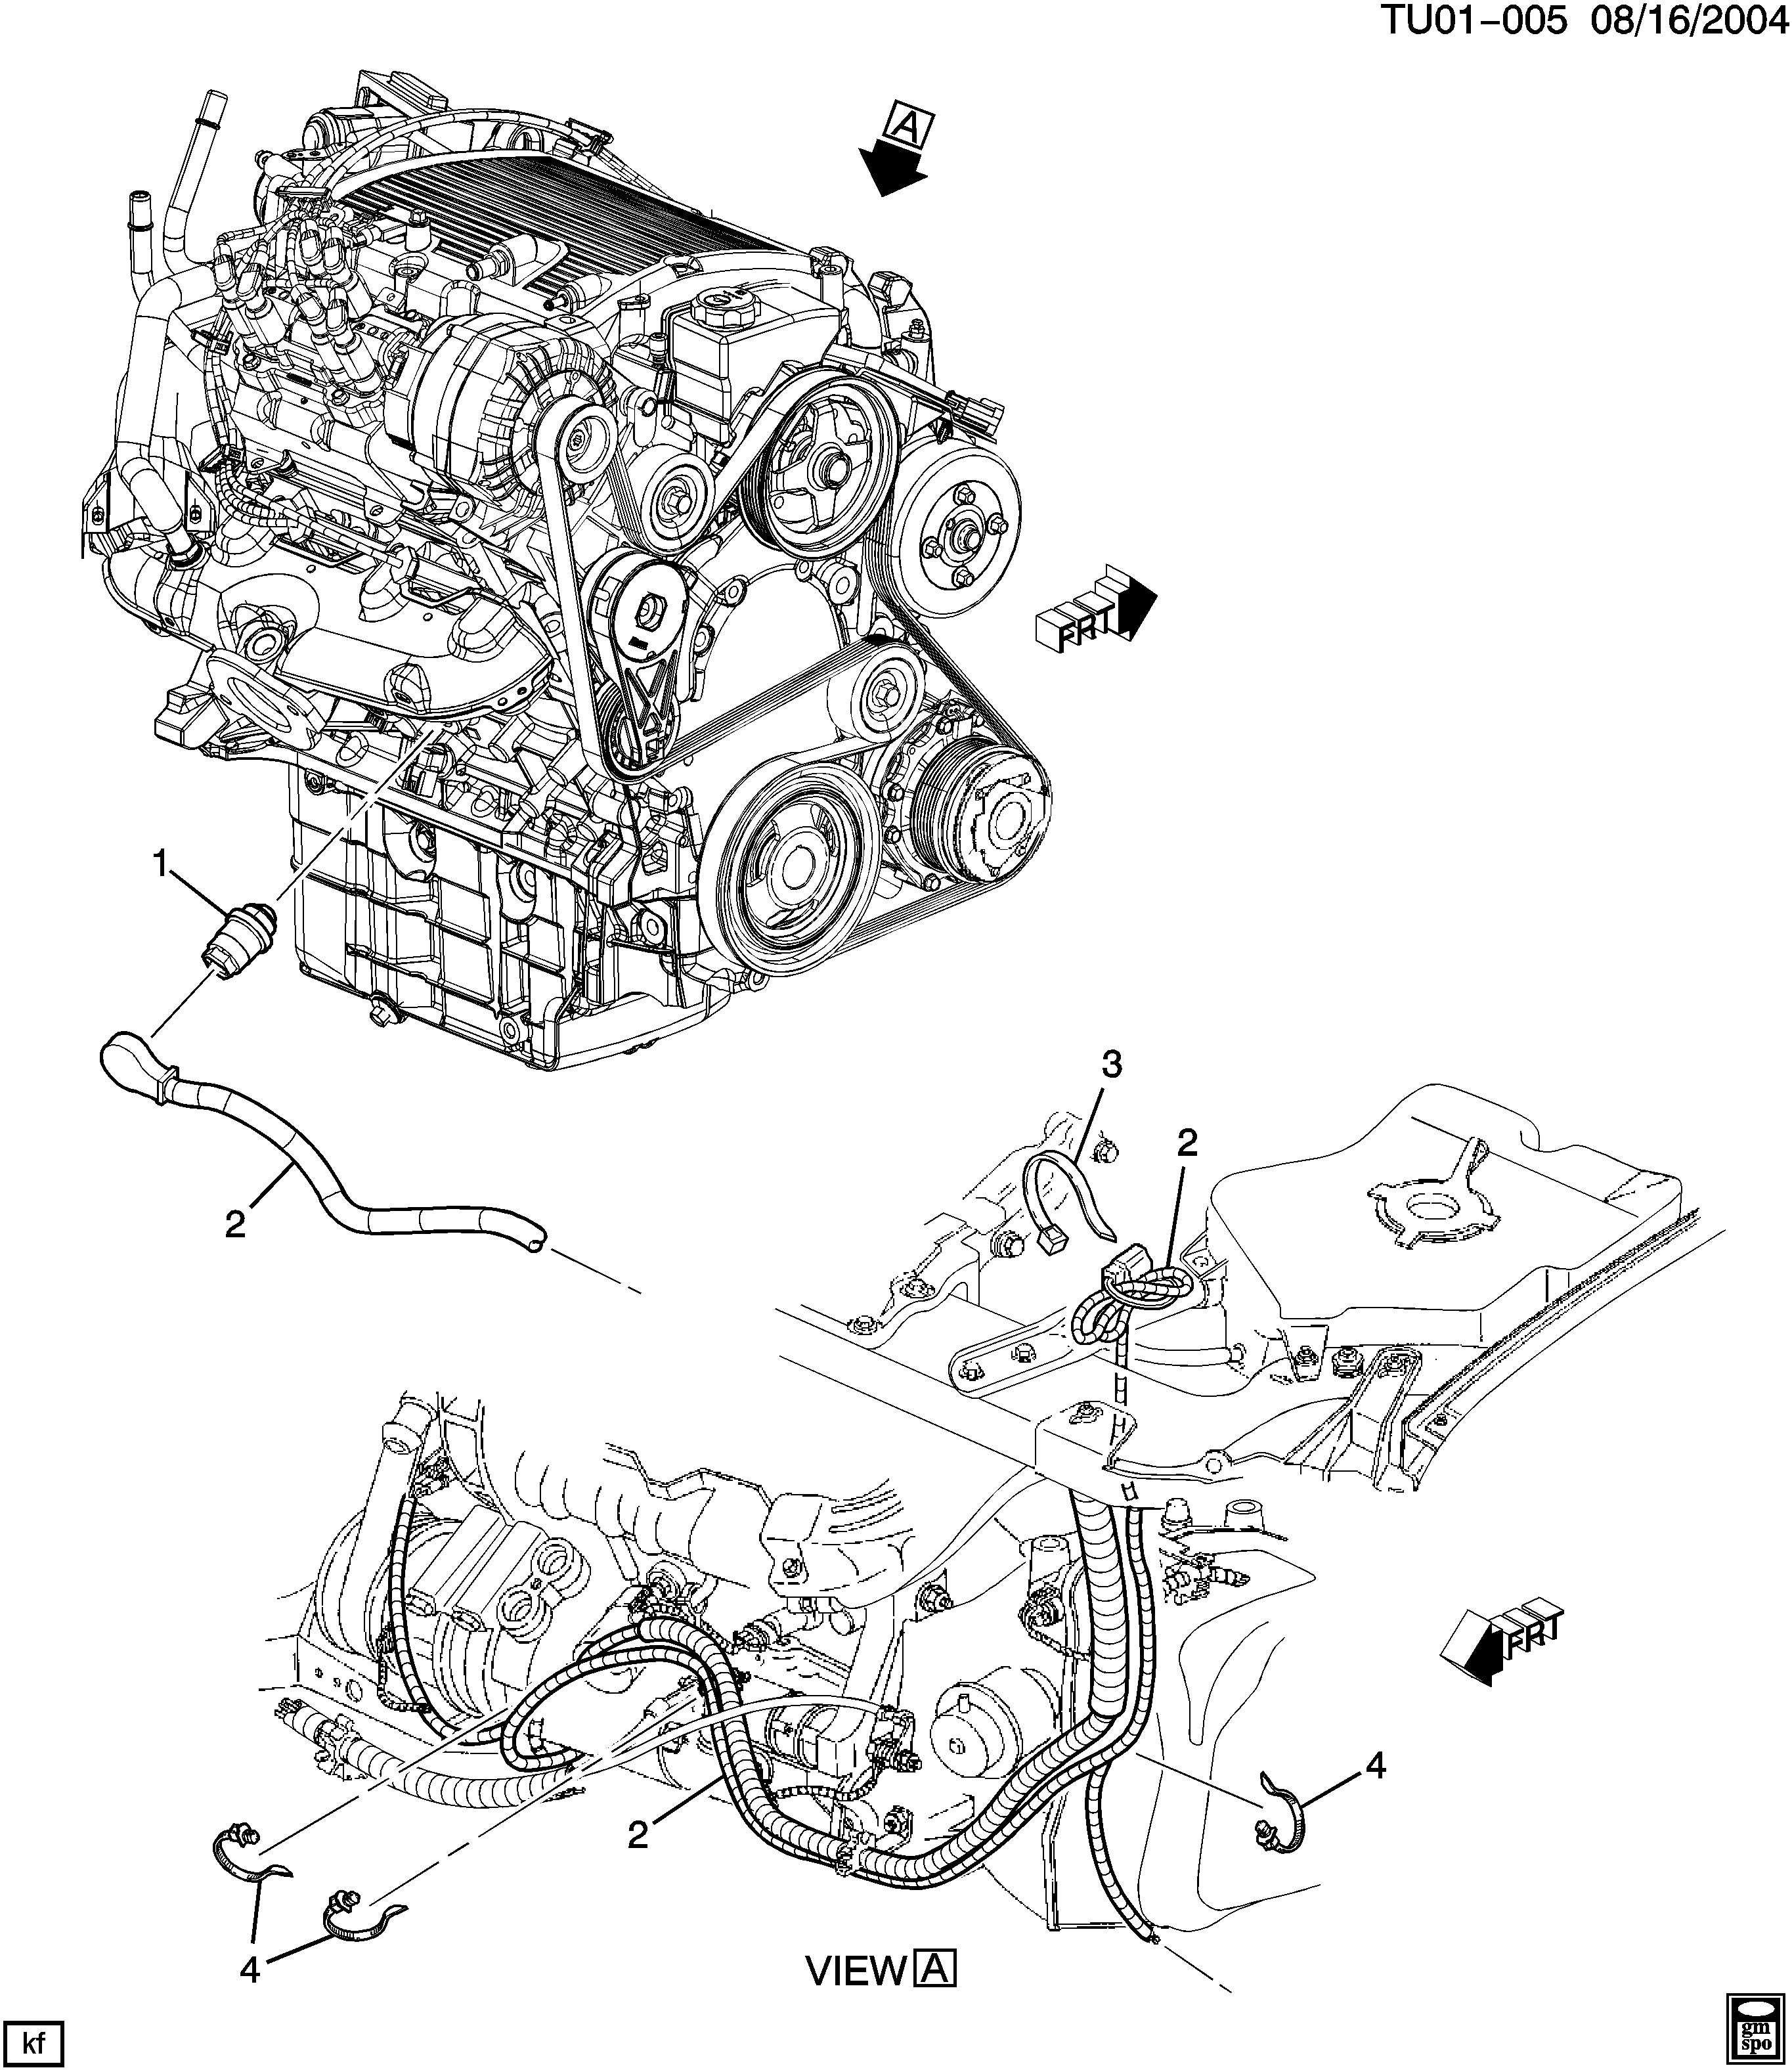 Chevy Oem Parts Diagram Uplander Awd Engine Block Heater Chevrolet Epc Line Of Chevy Oem Parts Diagram